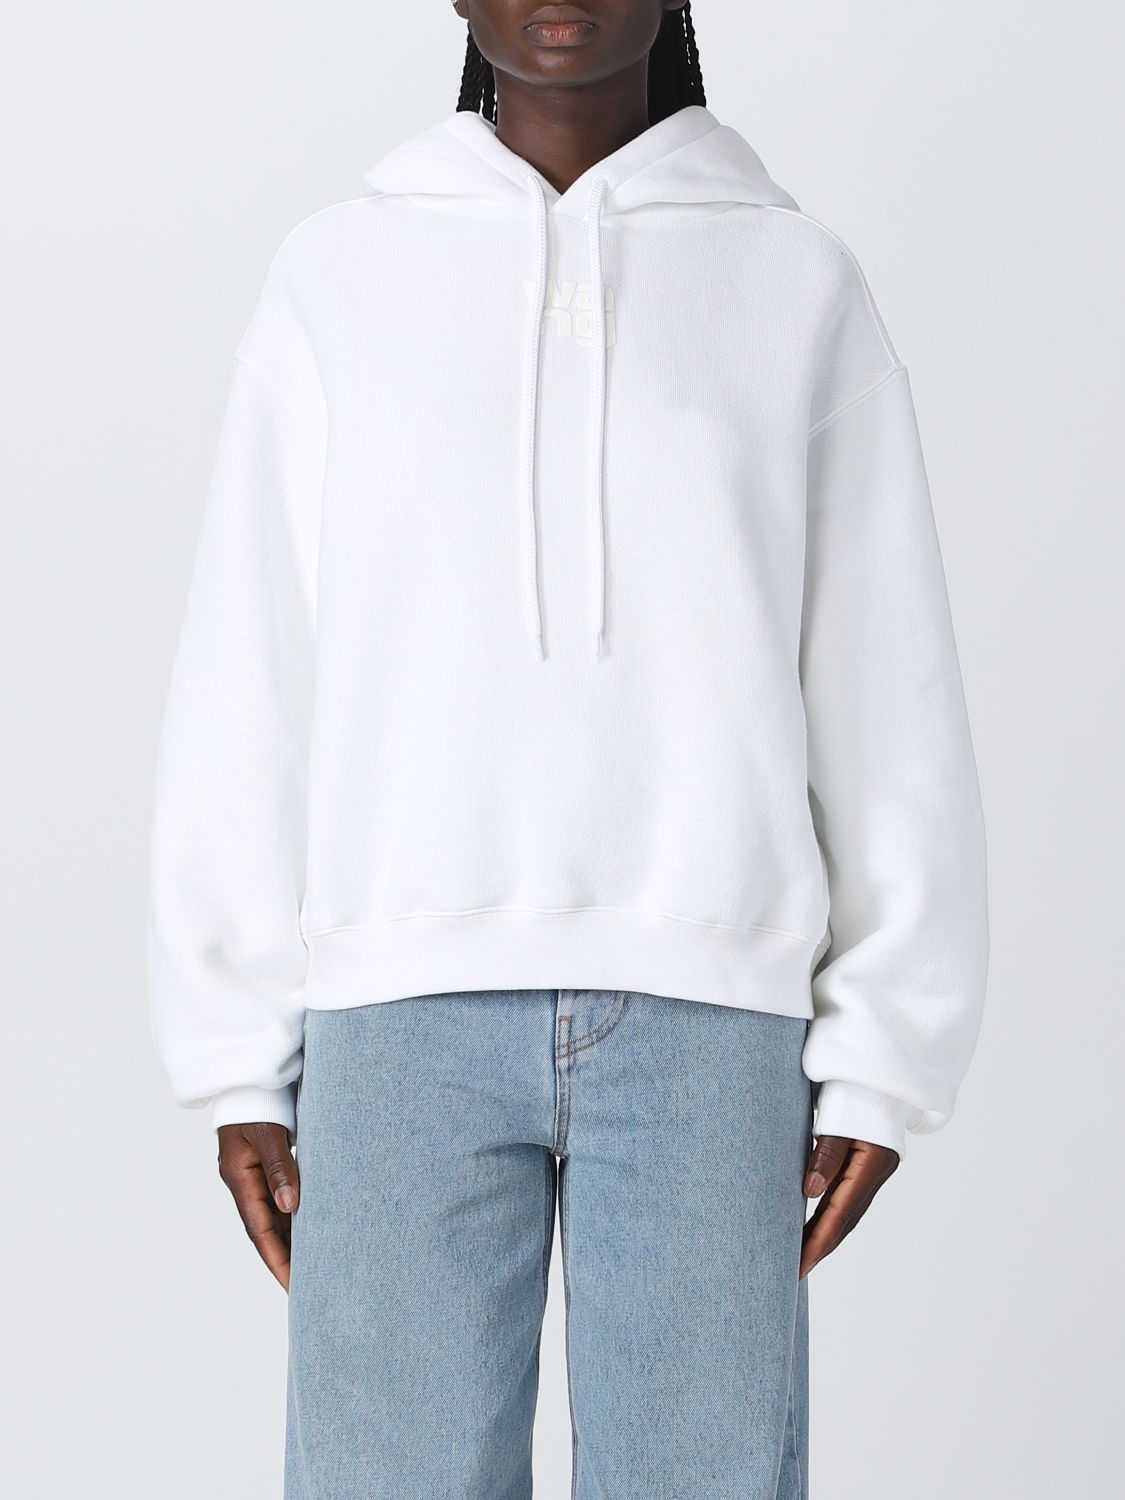 Alexander Wang sweatshirt in stretch cotton